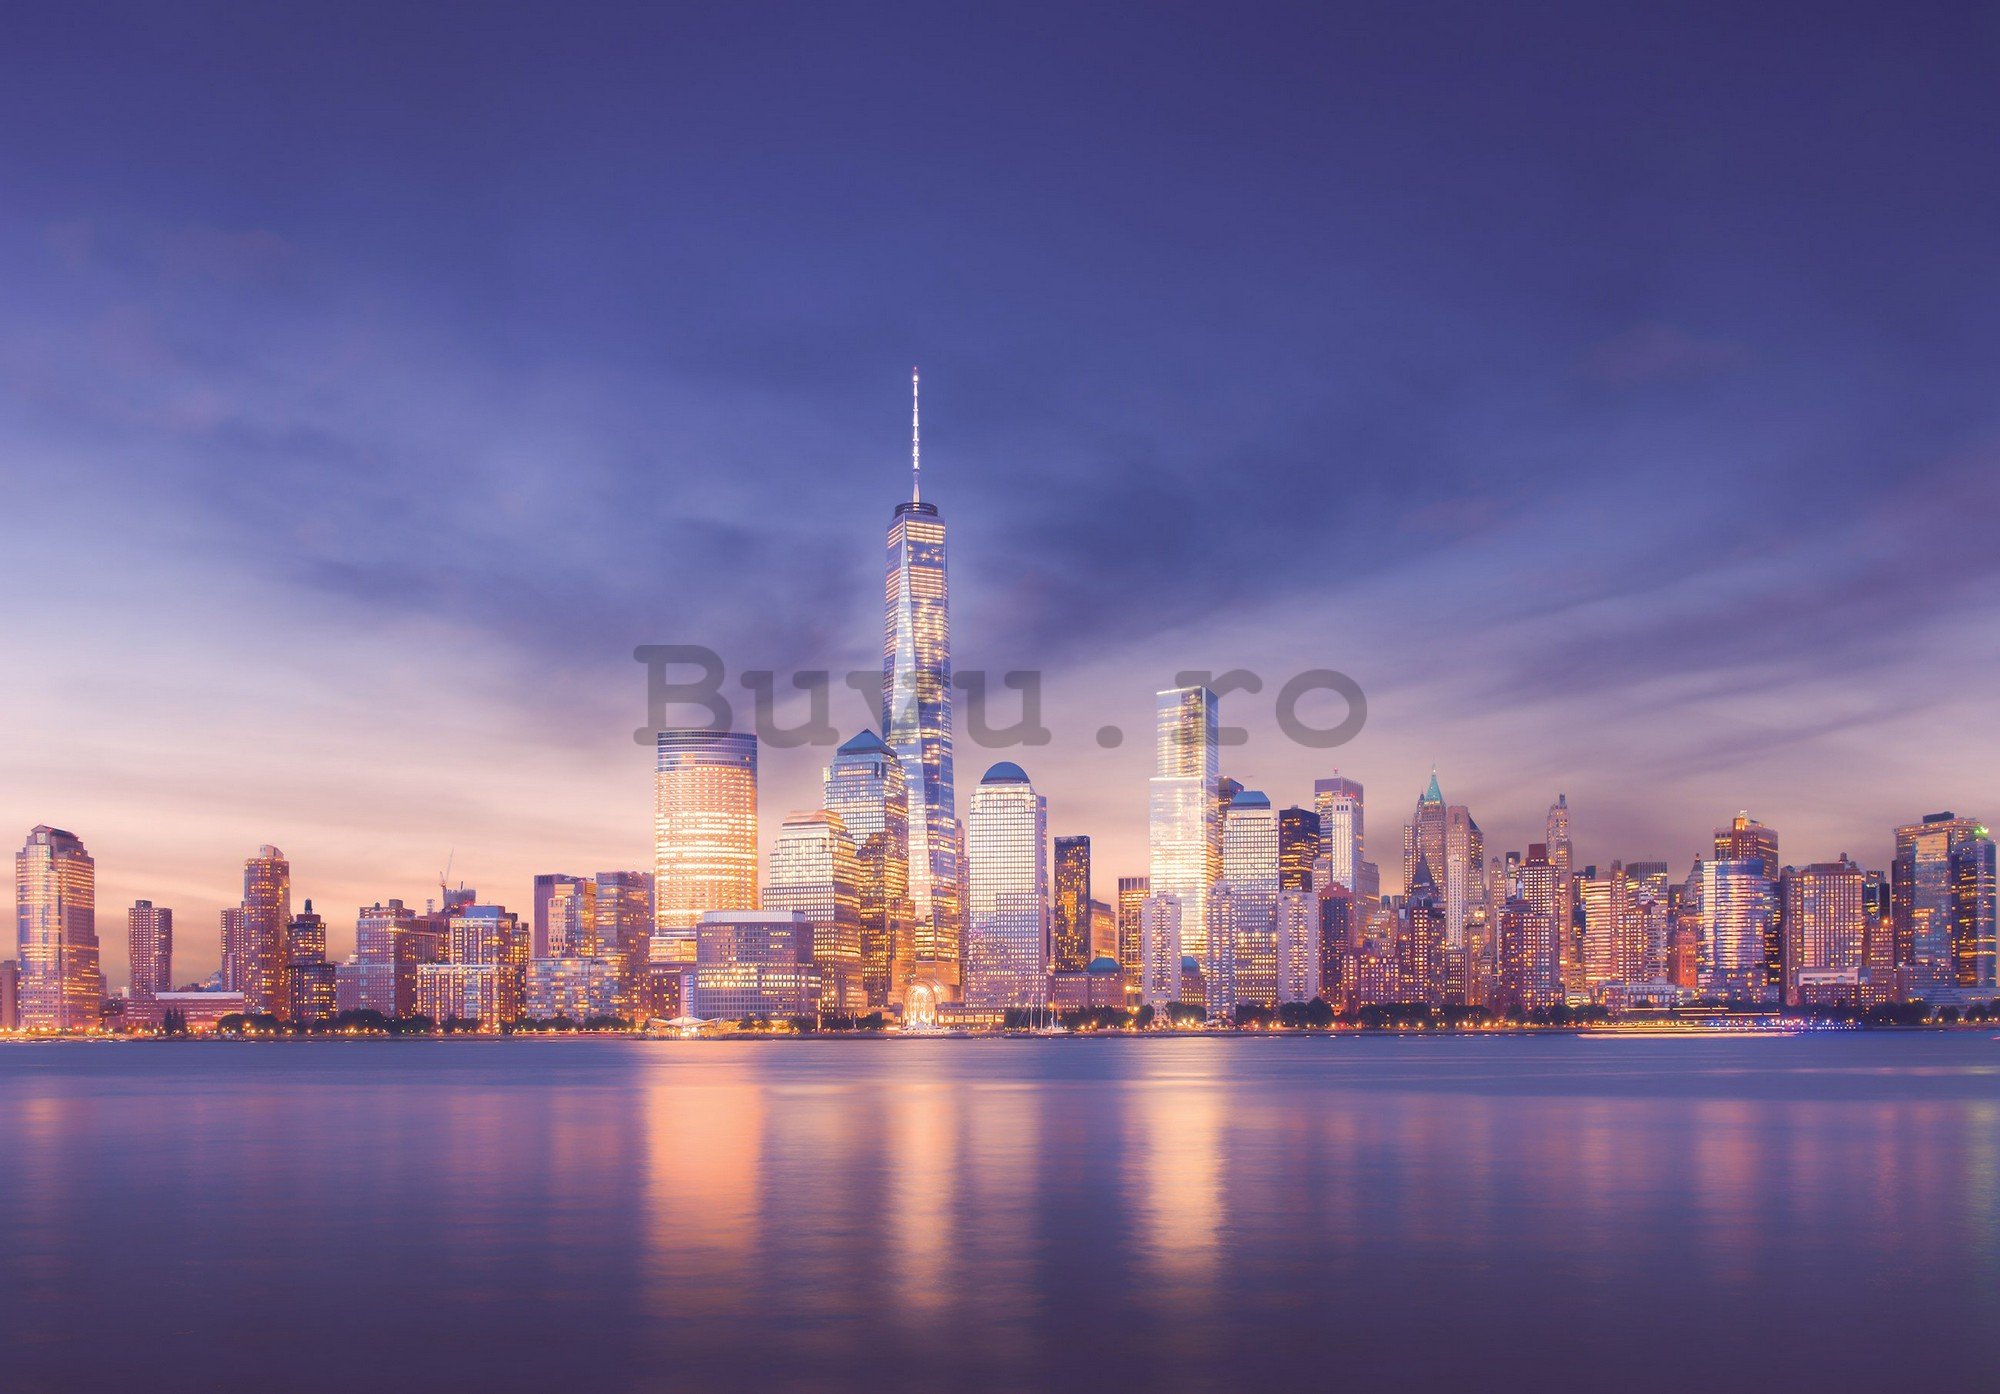 Fototapet: New York City (Manhattan după apus) - 254x92 cm